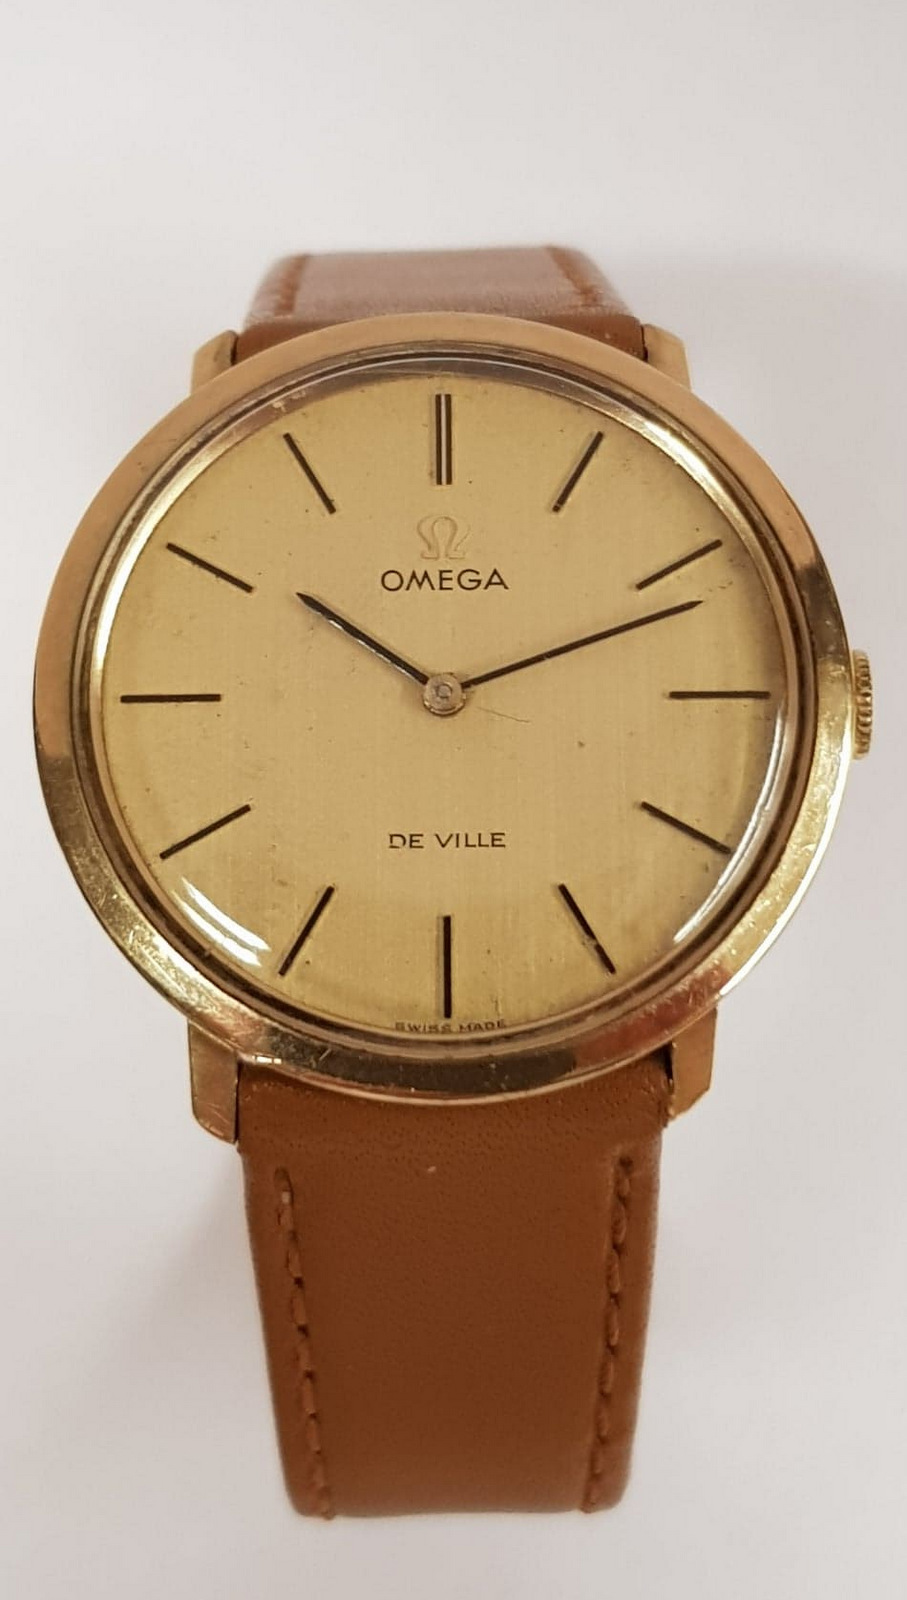 9ct Gold Omega De Ville On New Leather Strap - Image 4 of 4